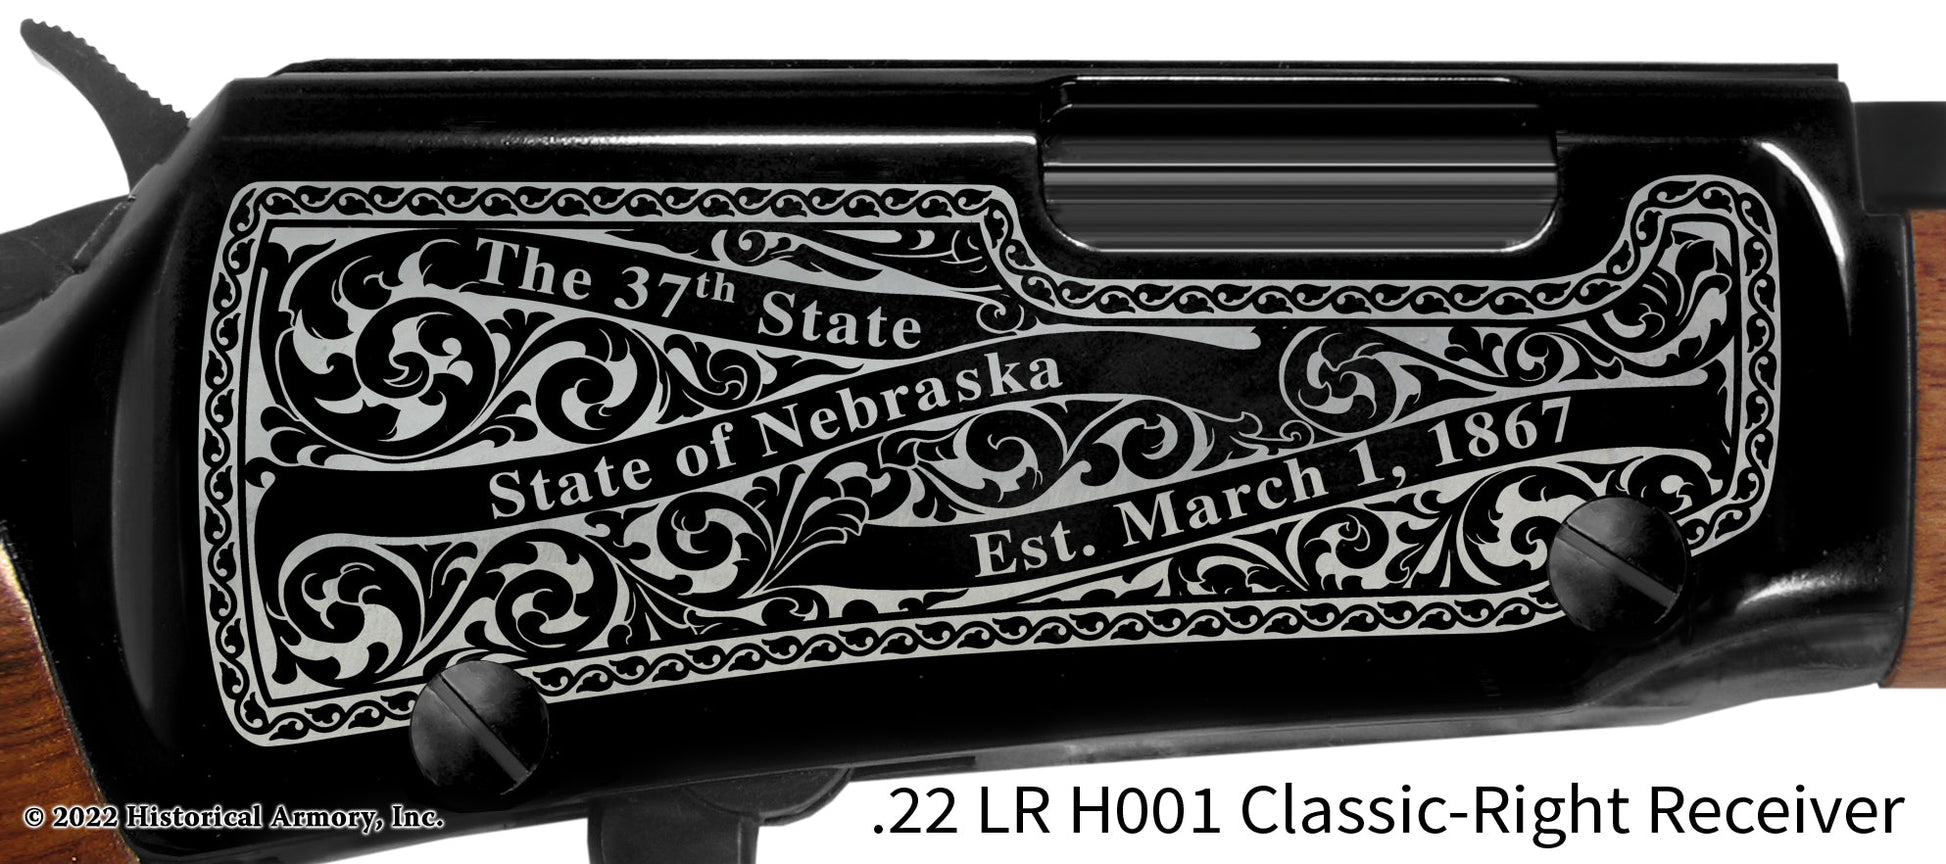 Burt County Nebraska Engraved Henry H001 Rifle